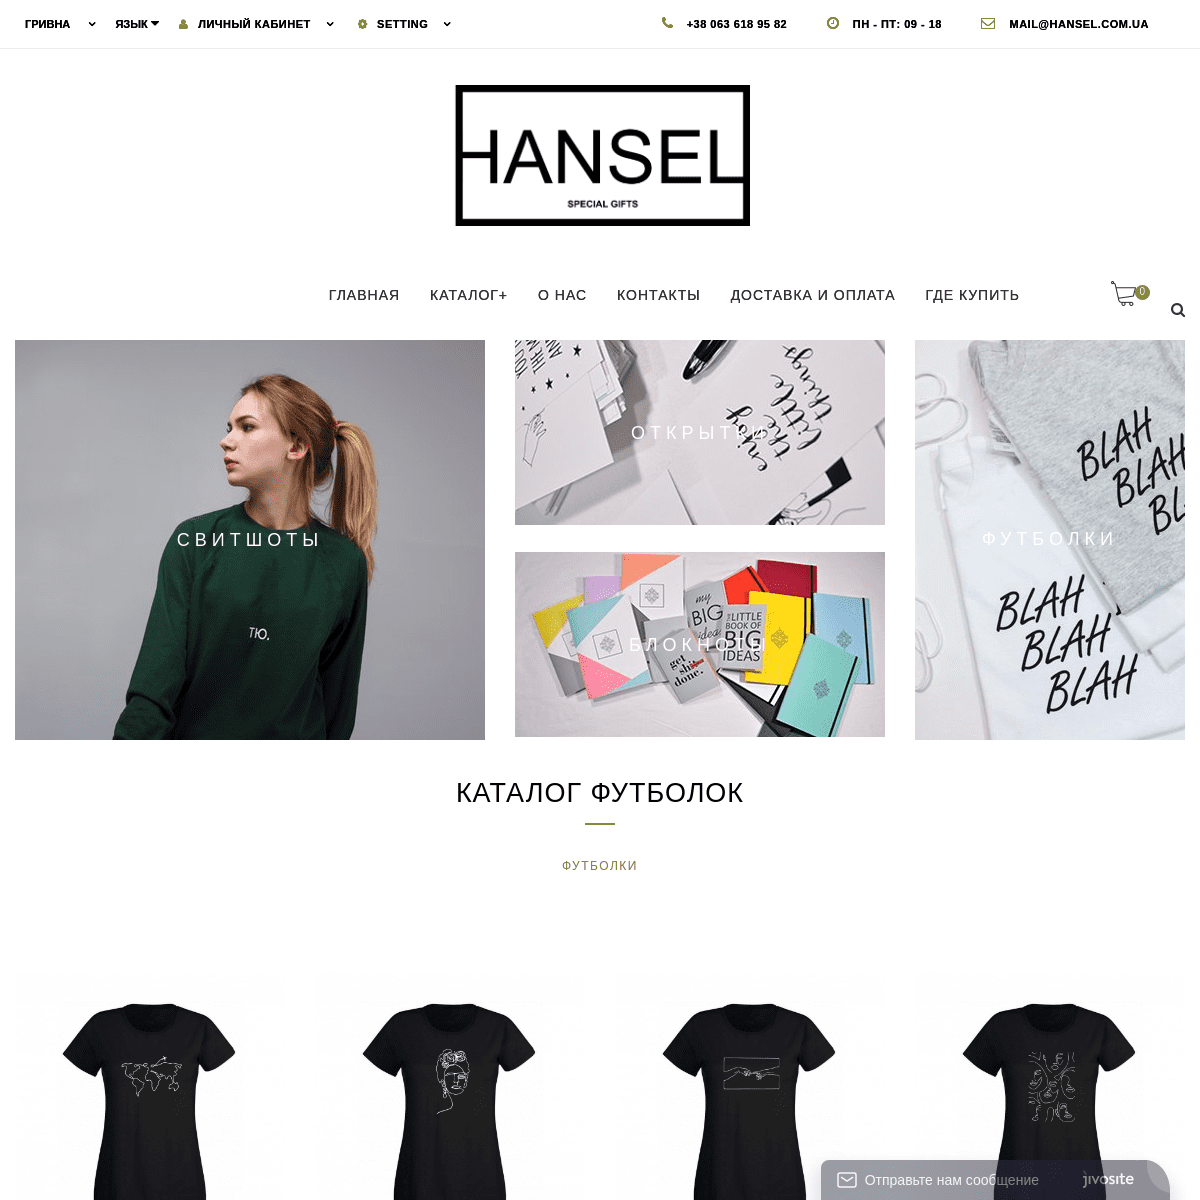 A complete backup of hansel.com.ua